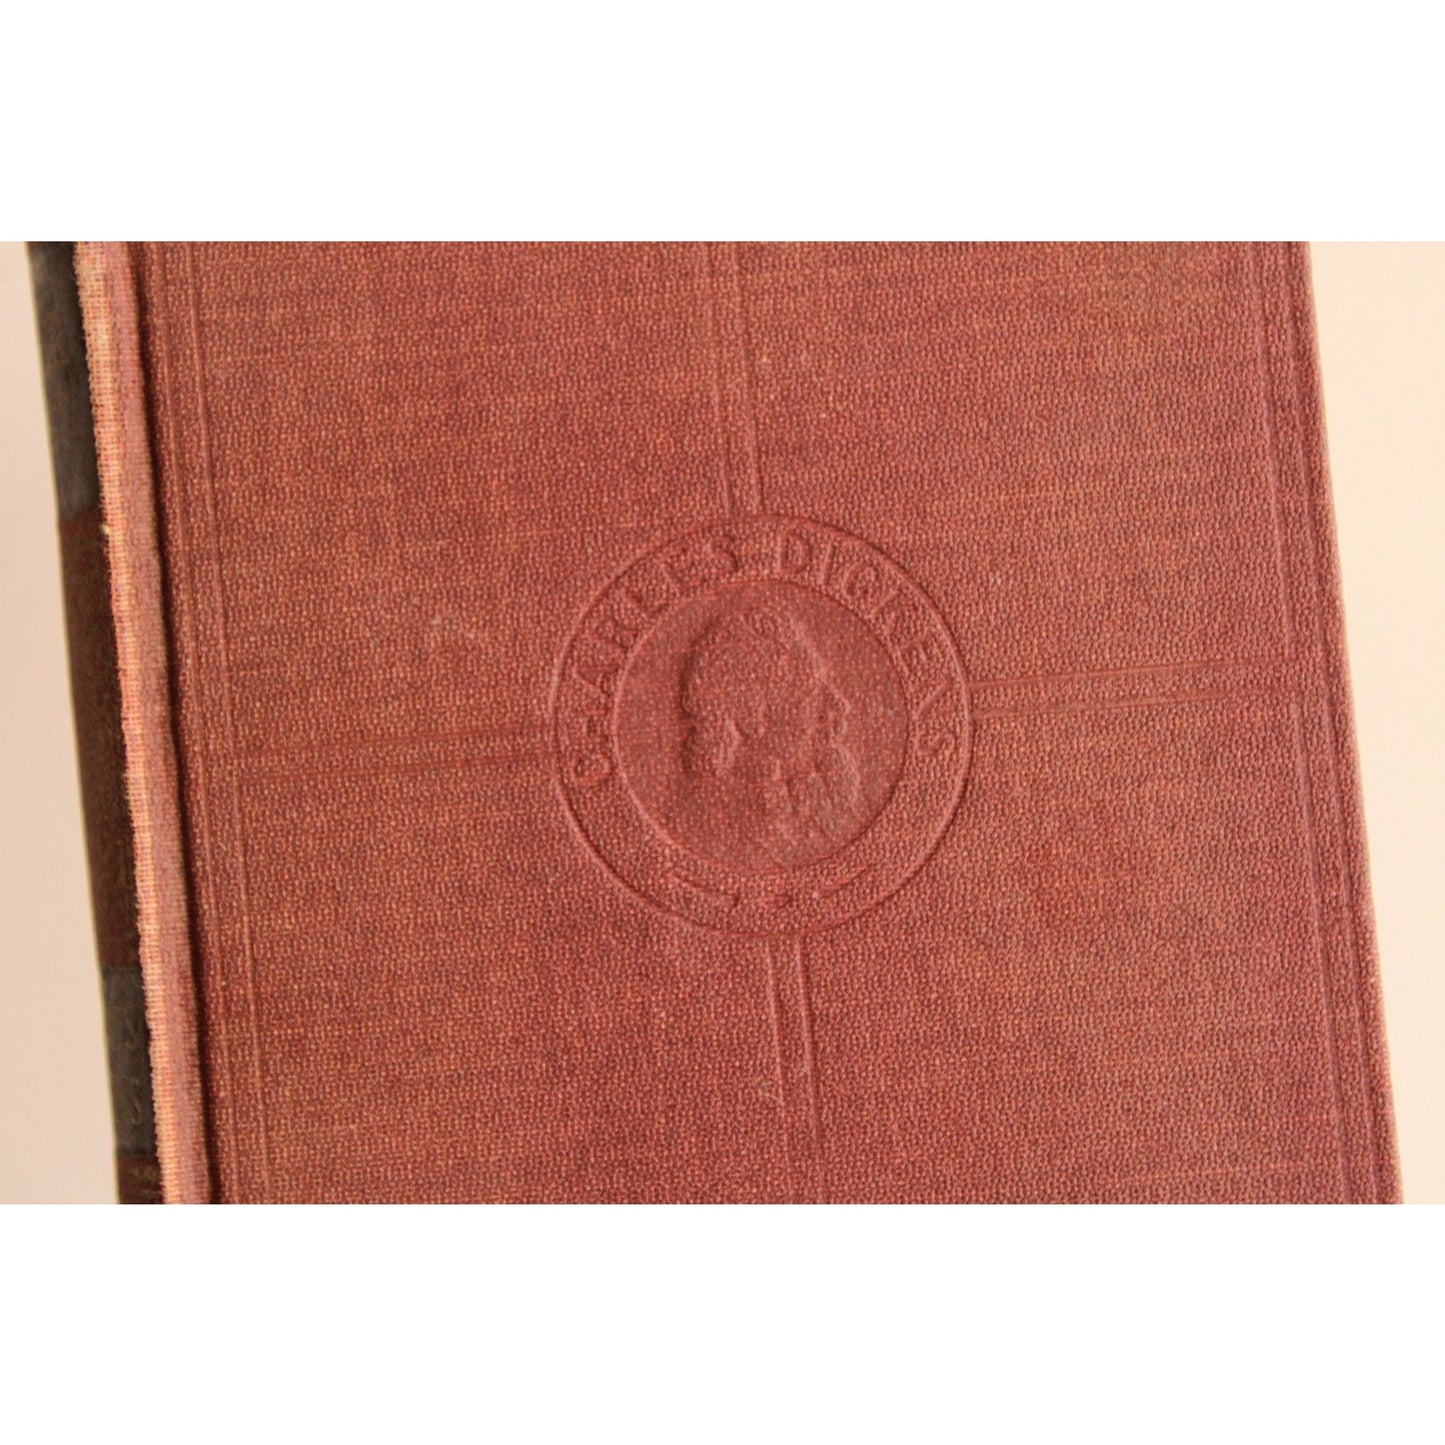 Vintage 1940s Book, Charles Dickens, Oliver Twist